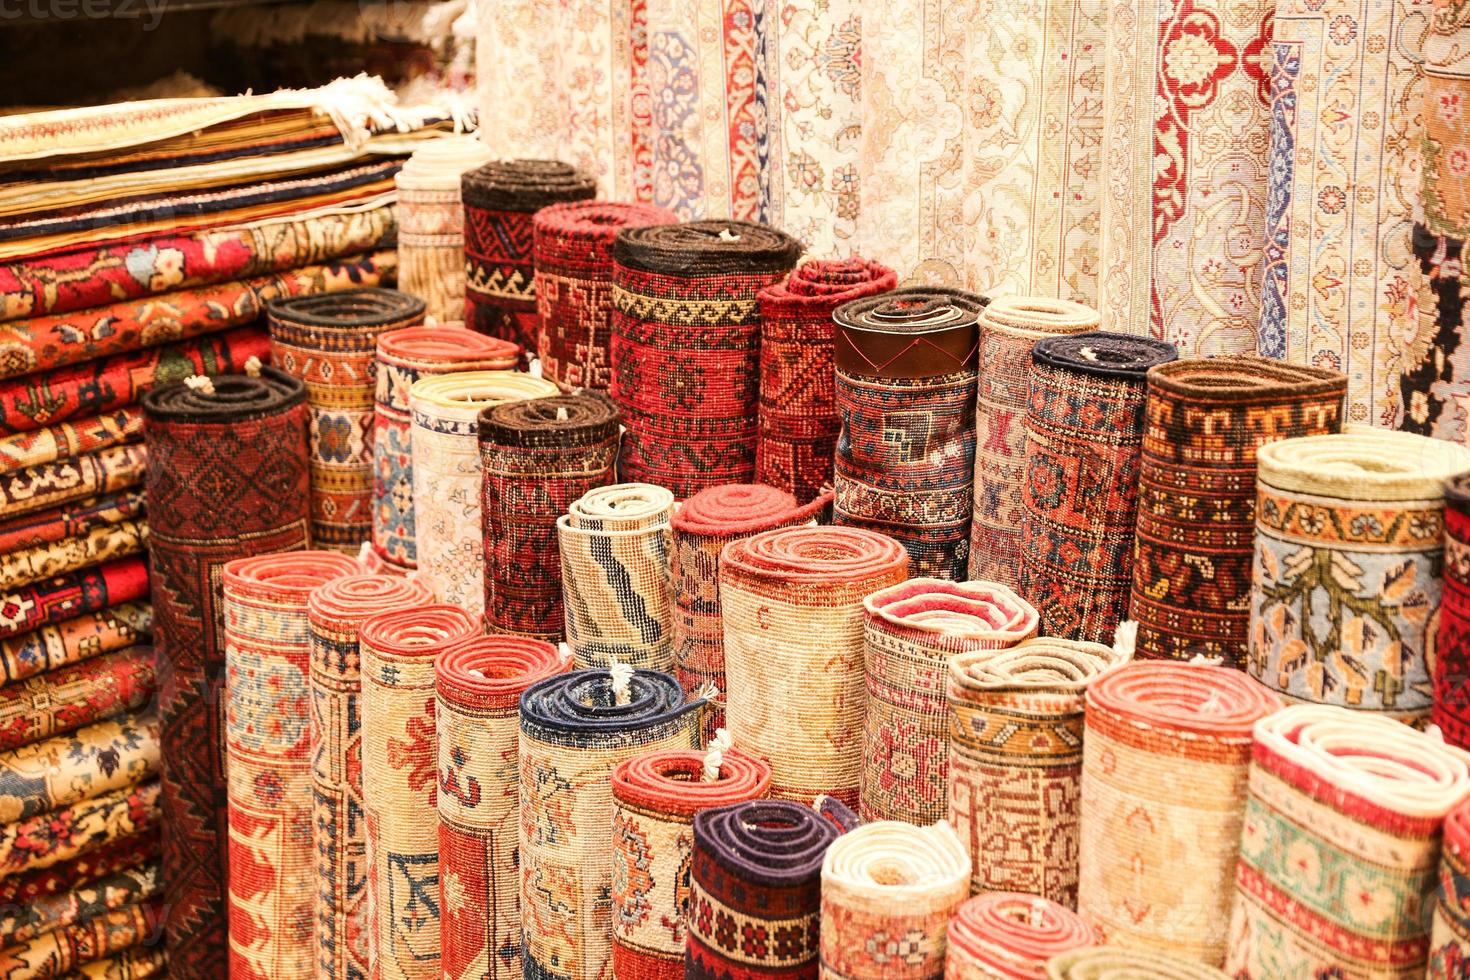 tapetes turcos no grande bazar foto